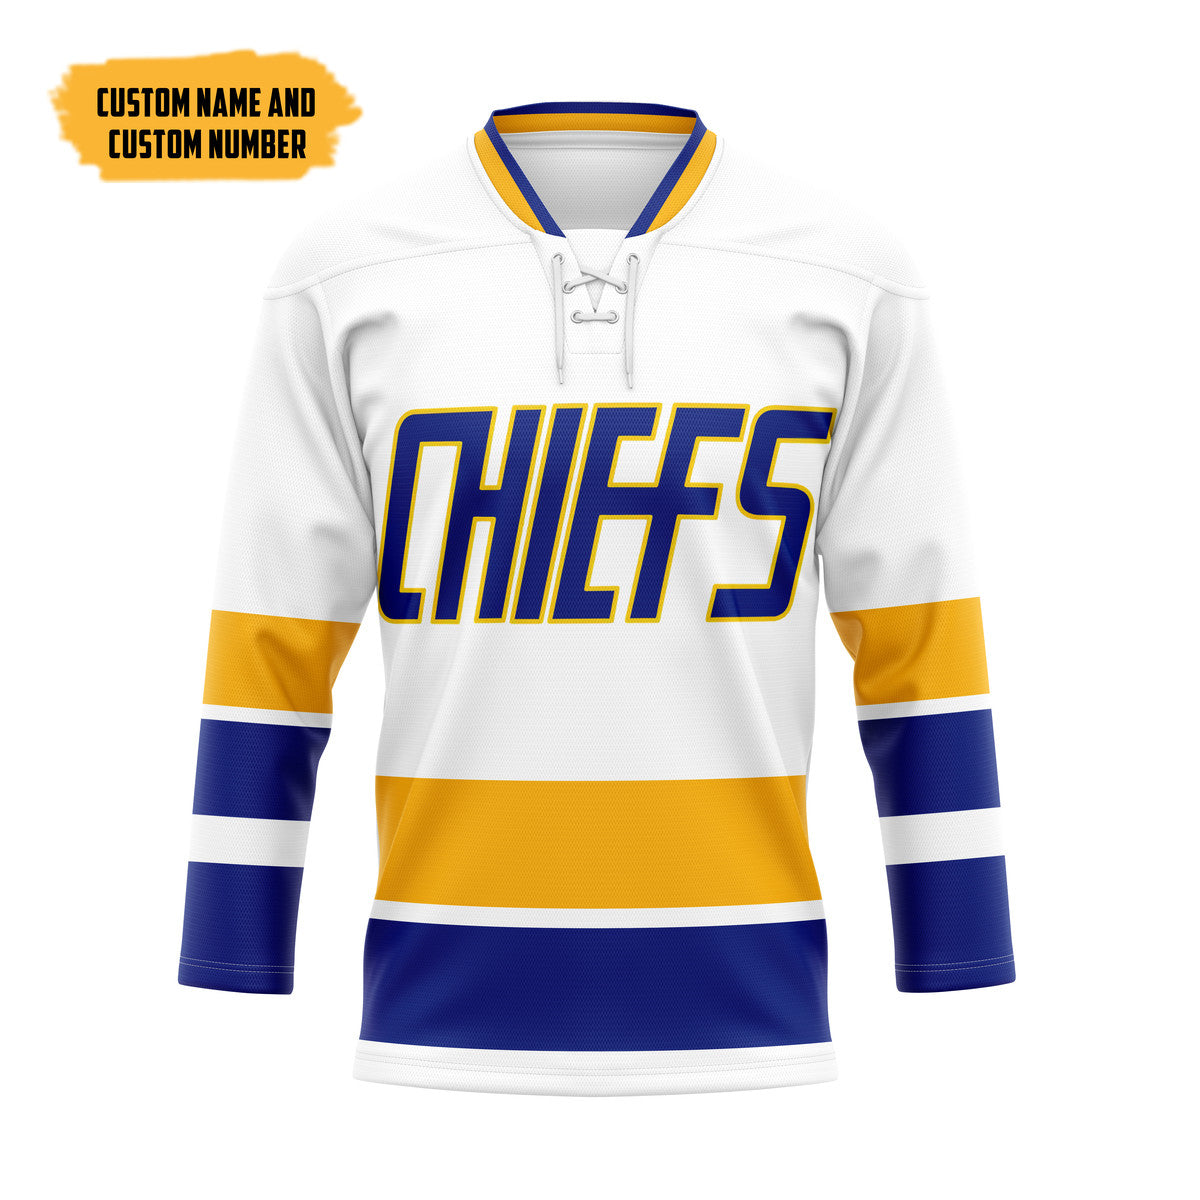 Official Charlestown Chiefs logo shirt, hoodie, sweater, long